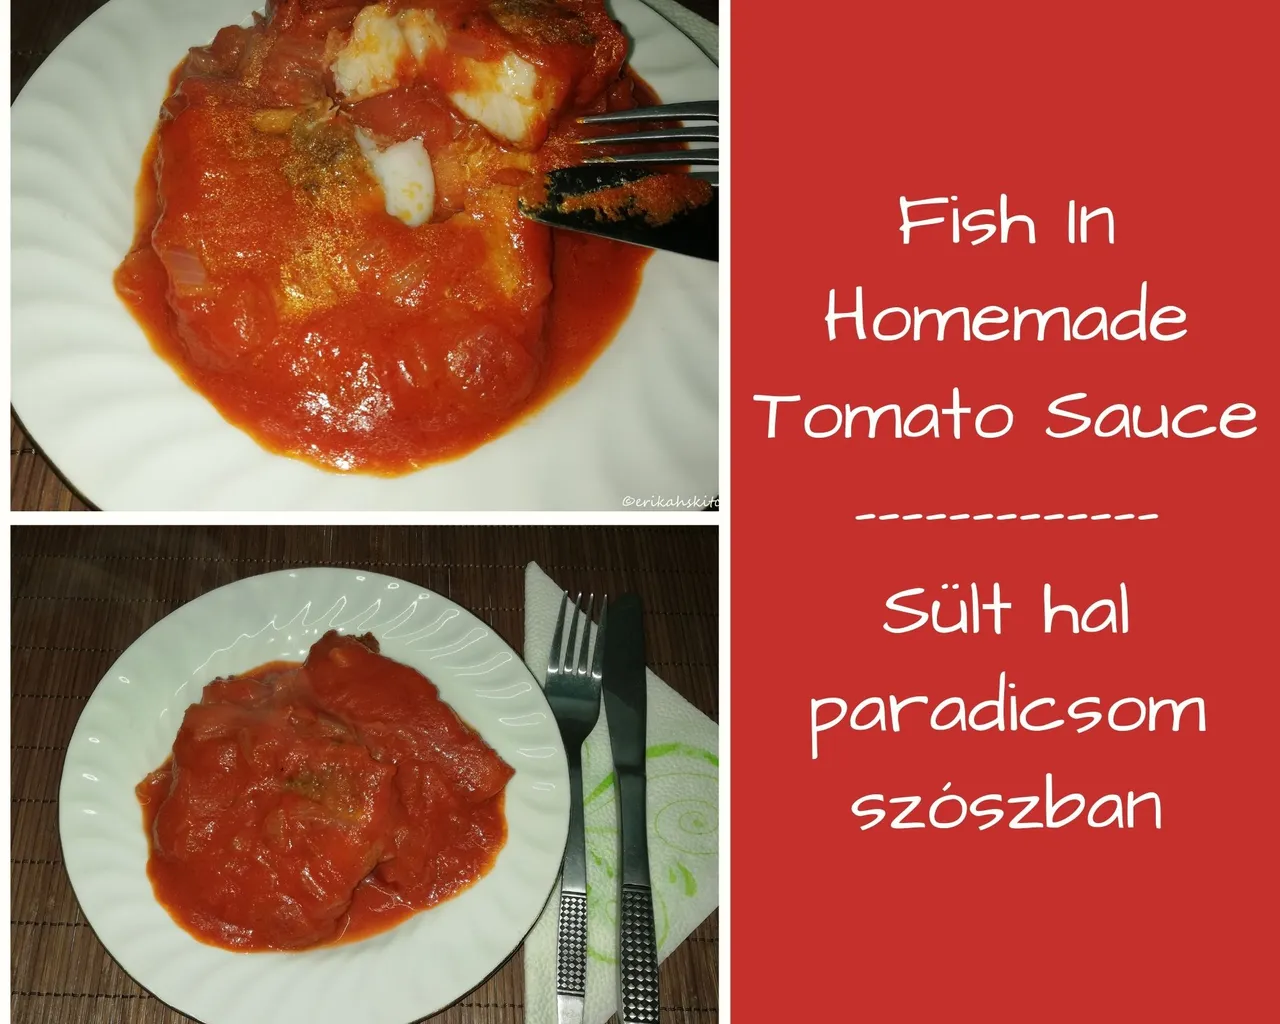 fish_in_homemade_tomato_sauce_s_lt_hal_paradicsom_sz_szban.jpg